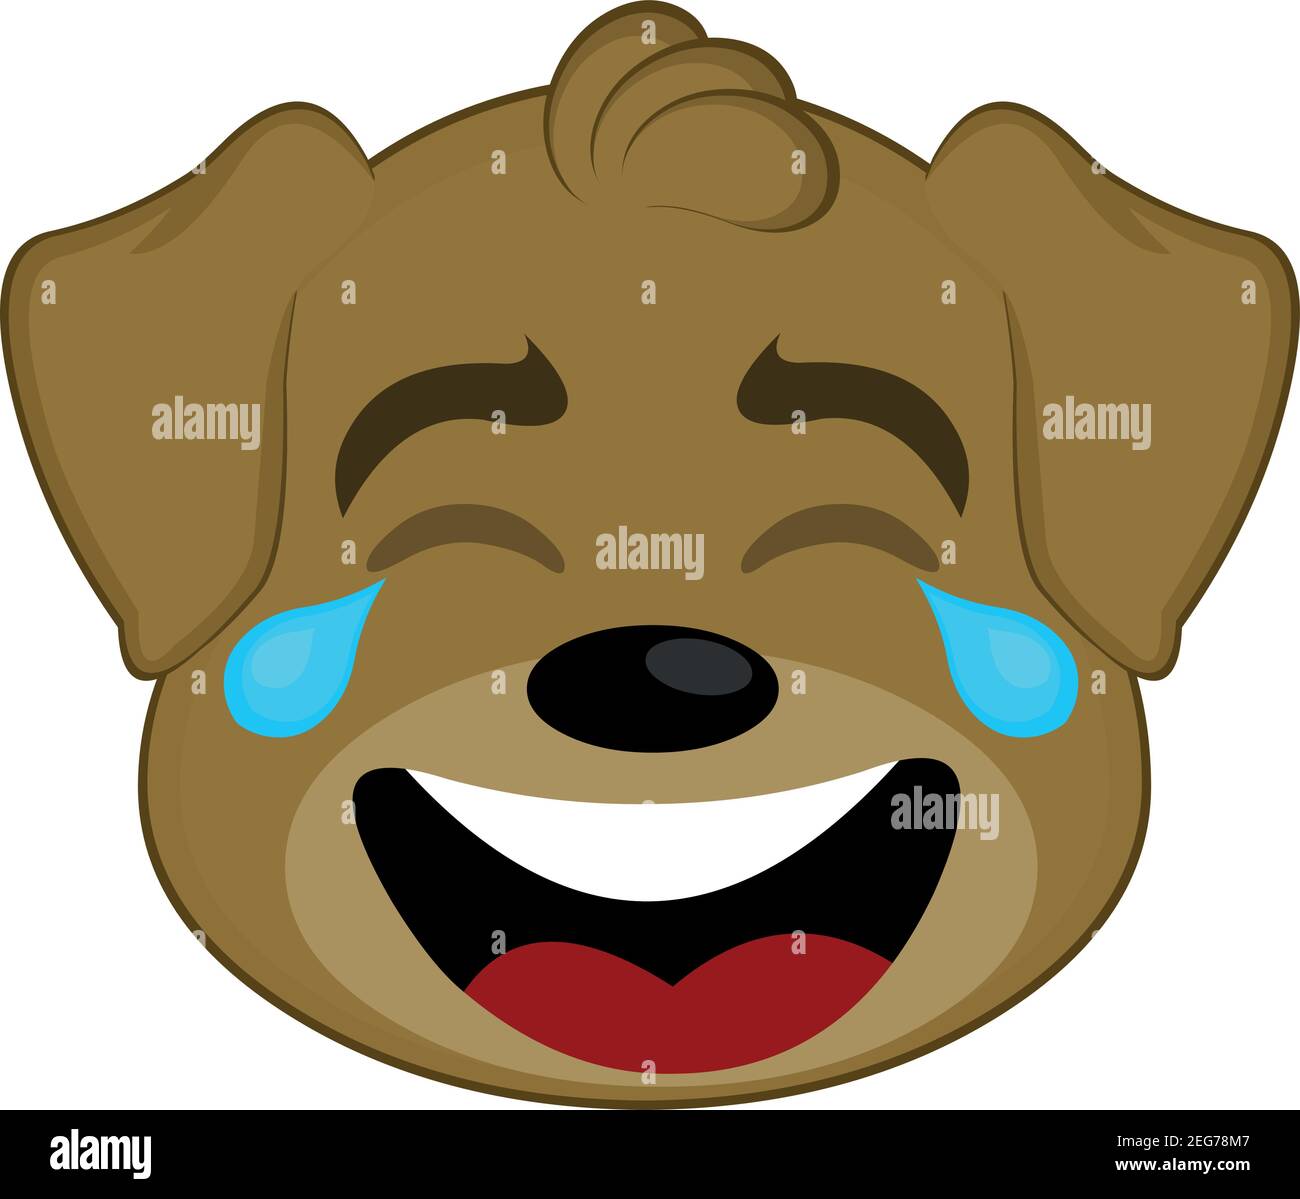 Vector emoticon illustration of a cartoon dog's face with tears of joy Stock Vector